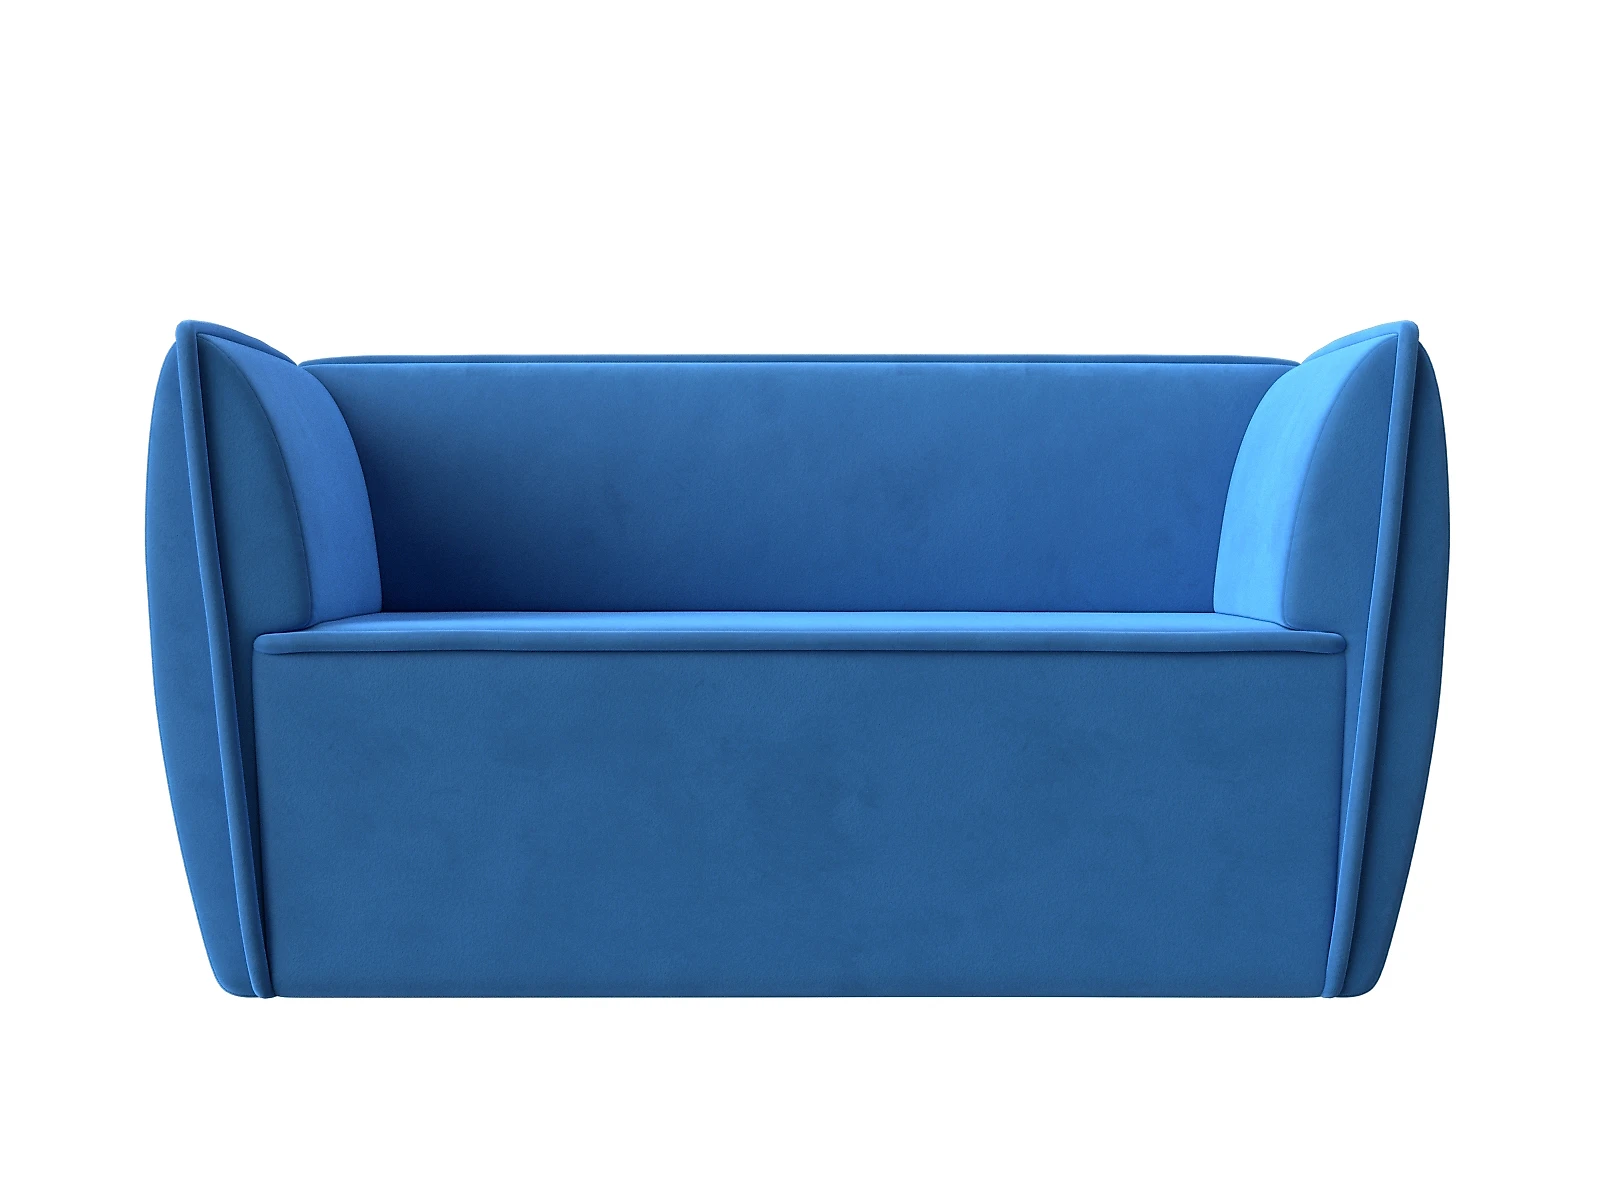  голубой диван  Бергамо-2 Плюш Дизайн 5